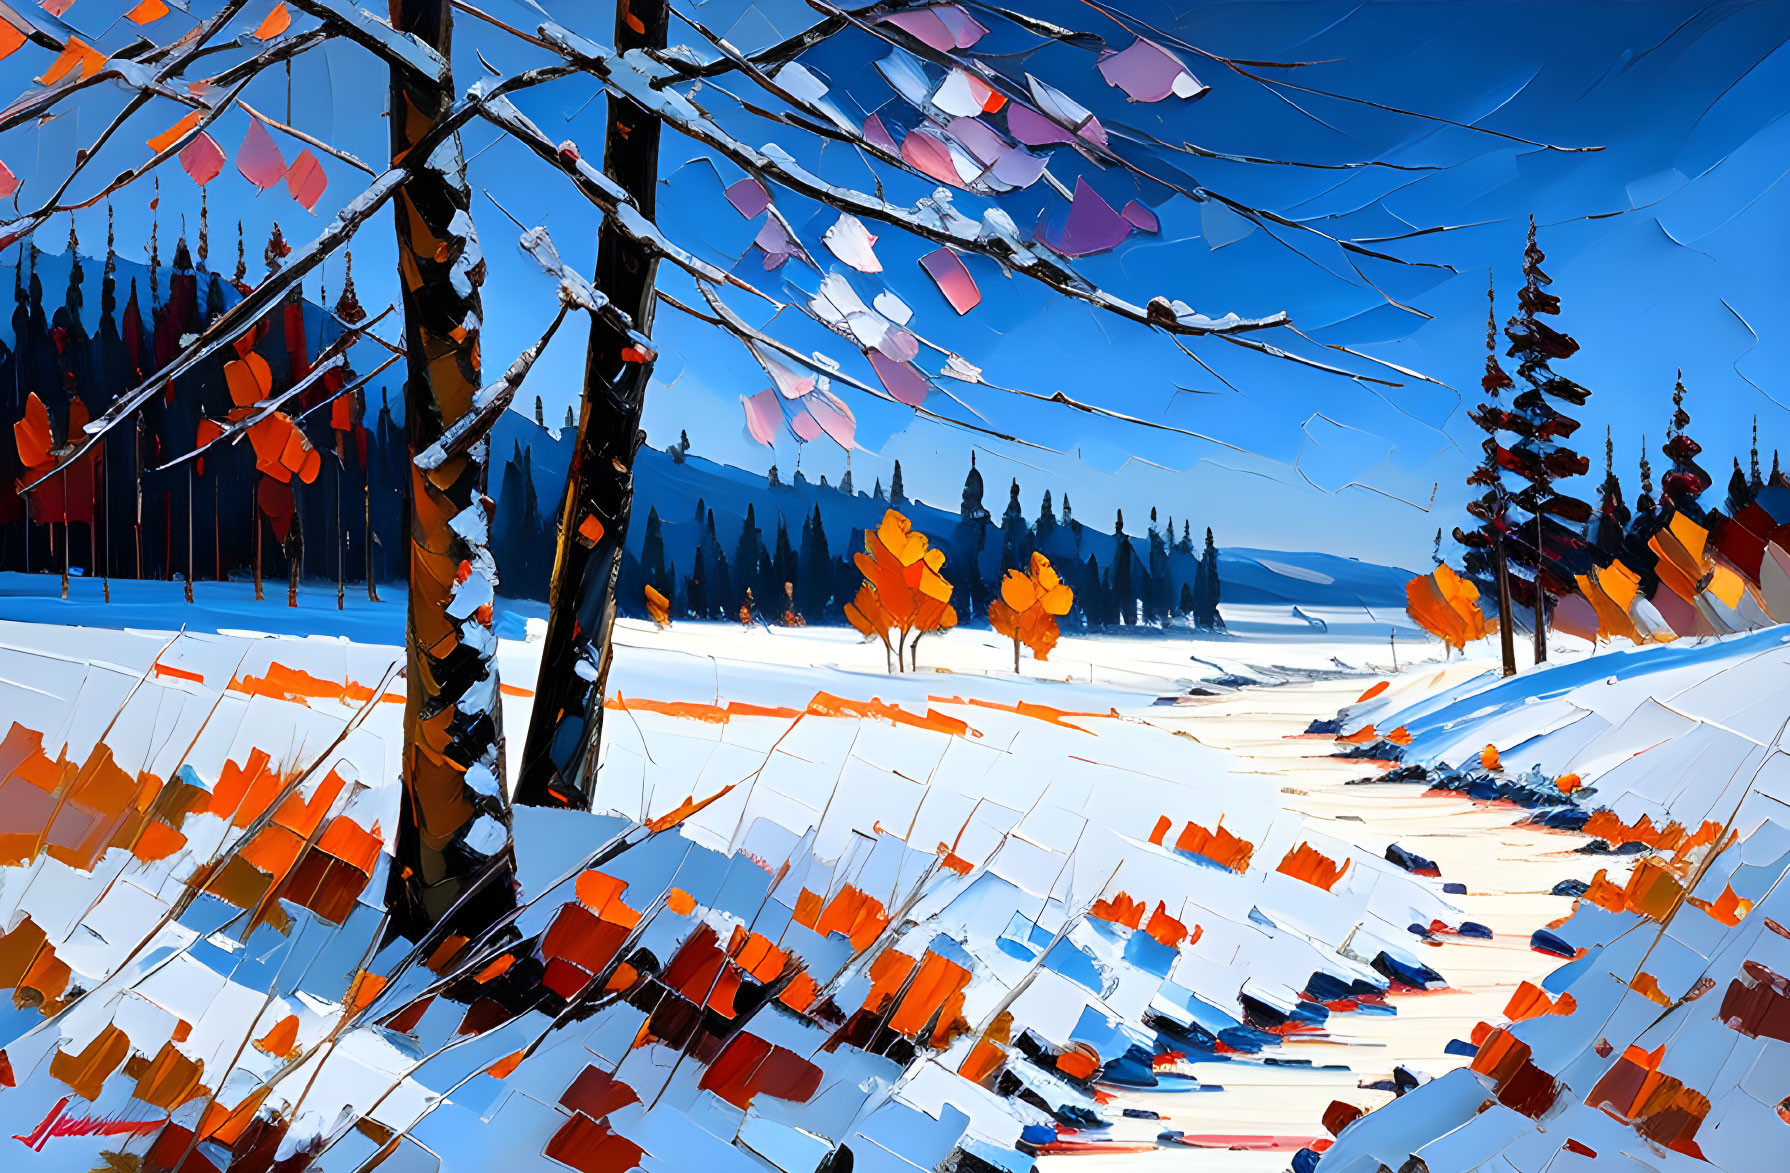 Stylized winter landscape painting with stark trees and orange foliage